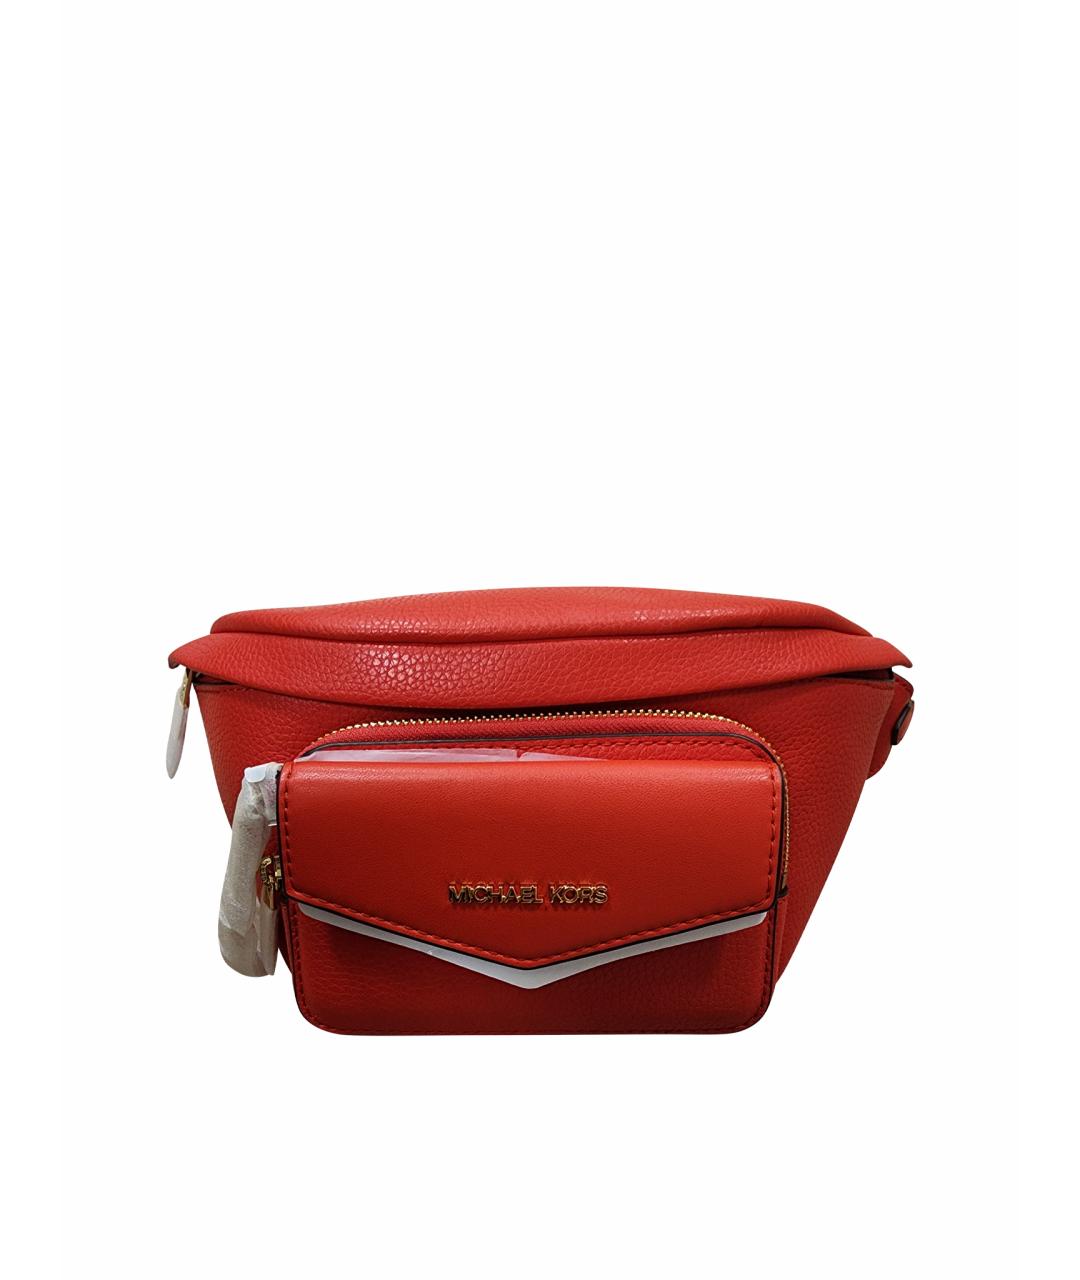 MICHAEL KORS Красная кожаная поясная сумка, фото 1